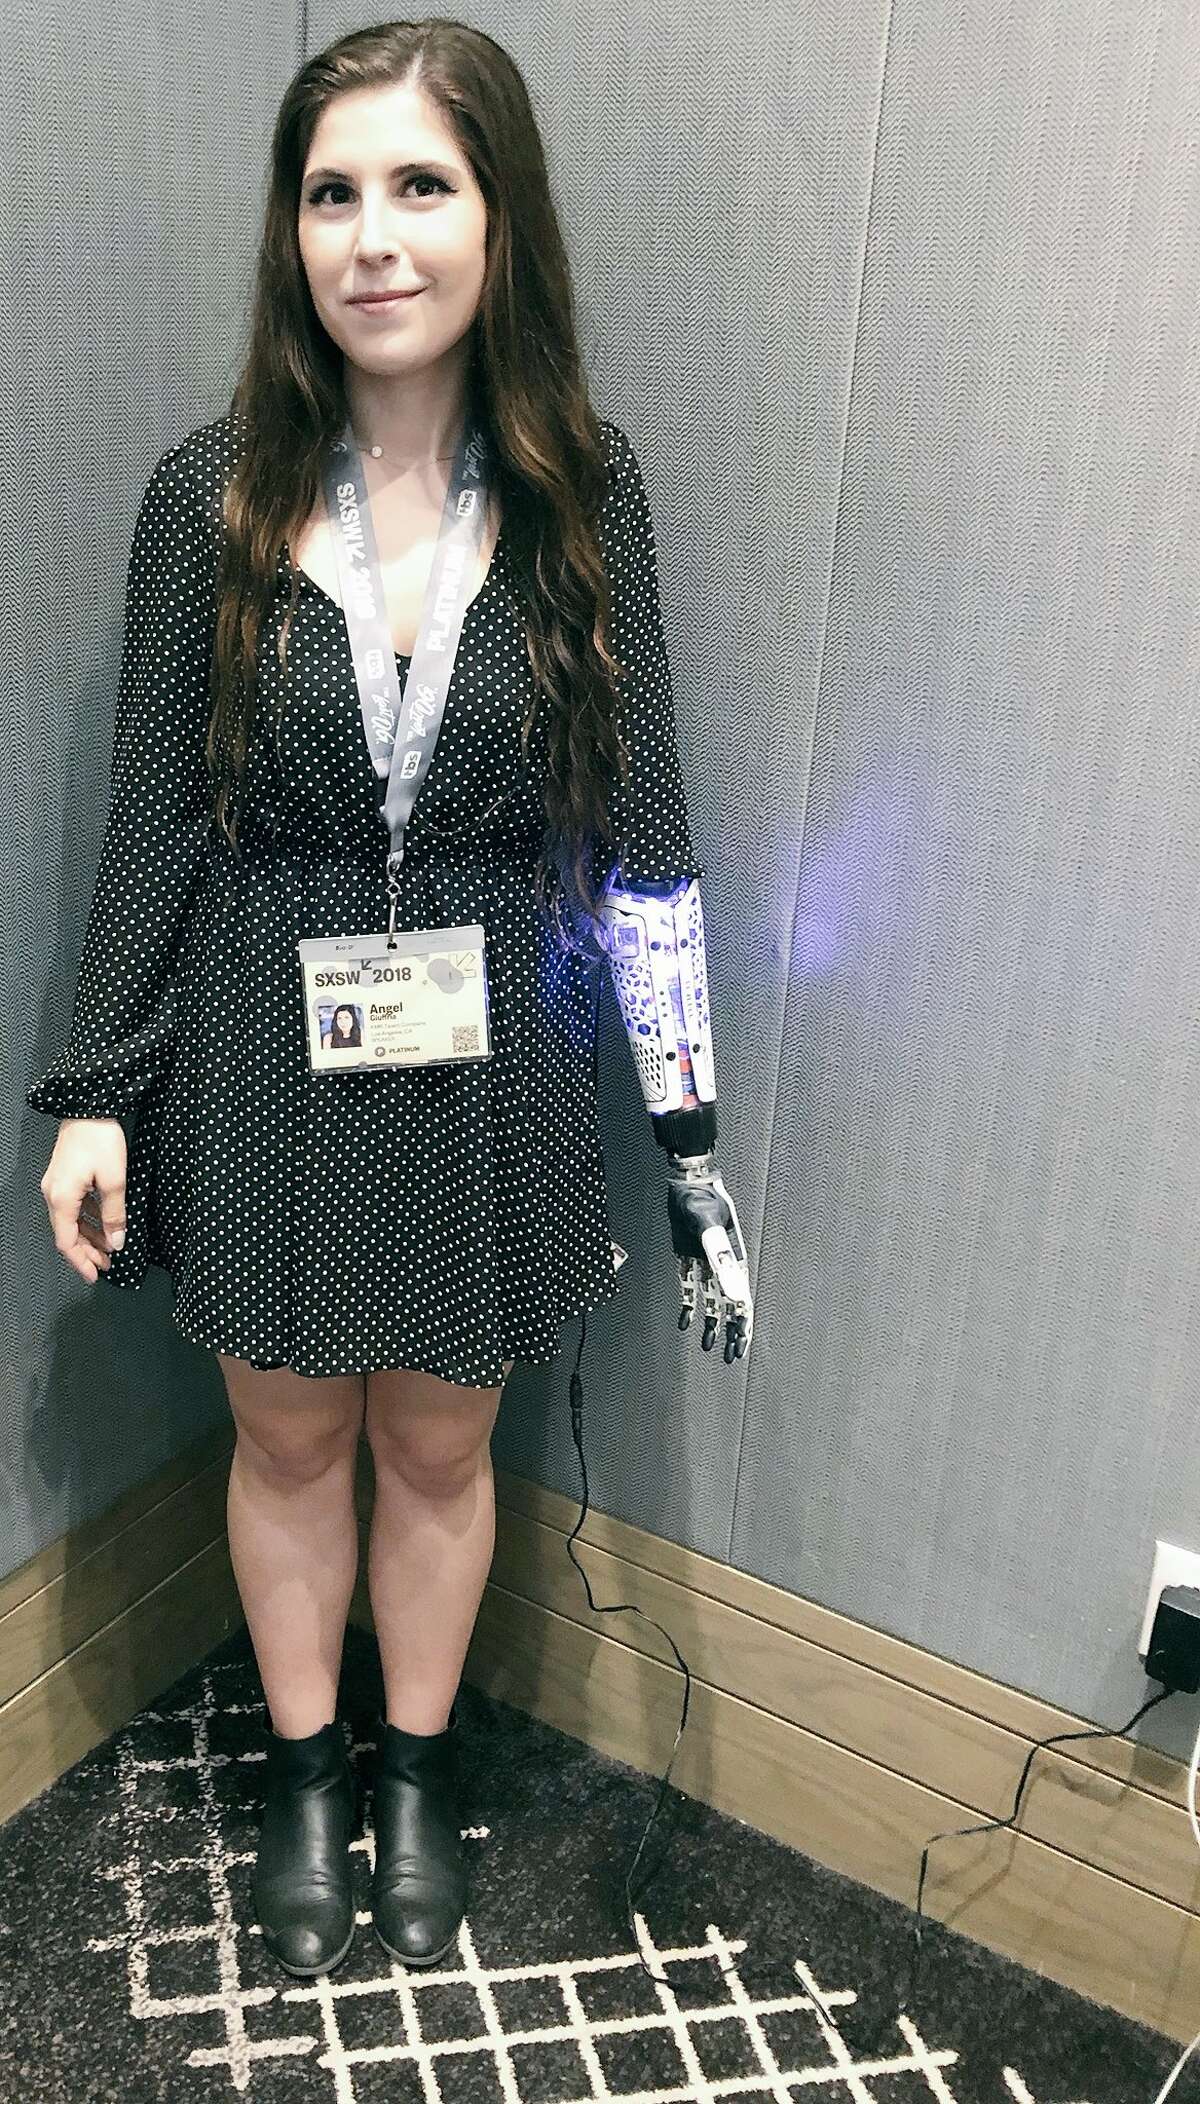 Bionic woman posts of 'cyborg problems' at SXSW